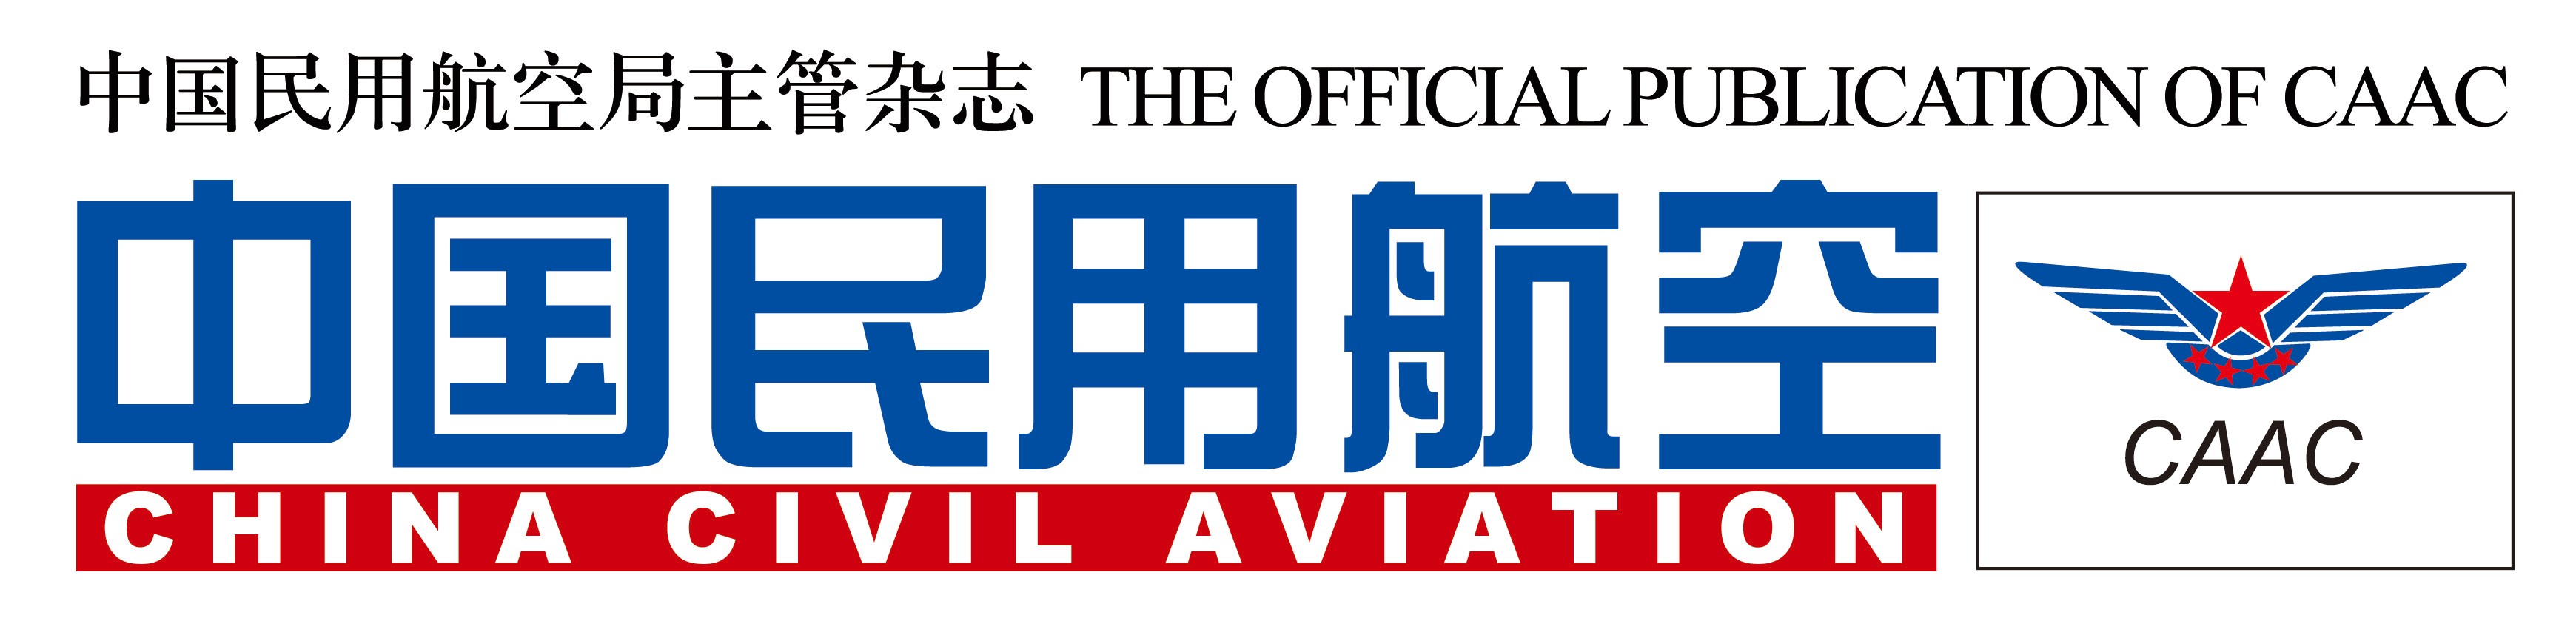 China Civil Aviation Magazine